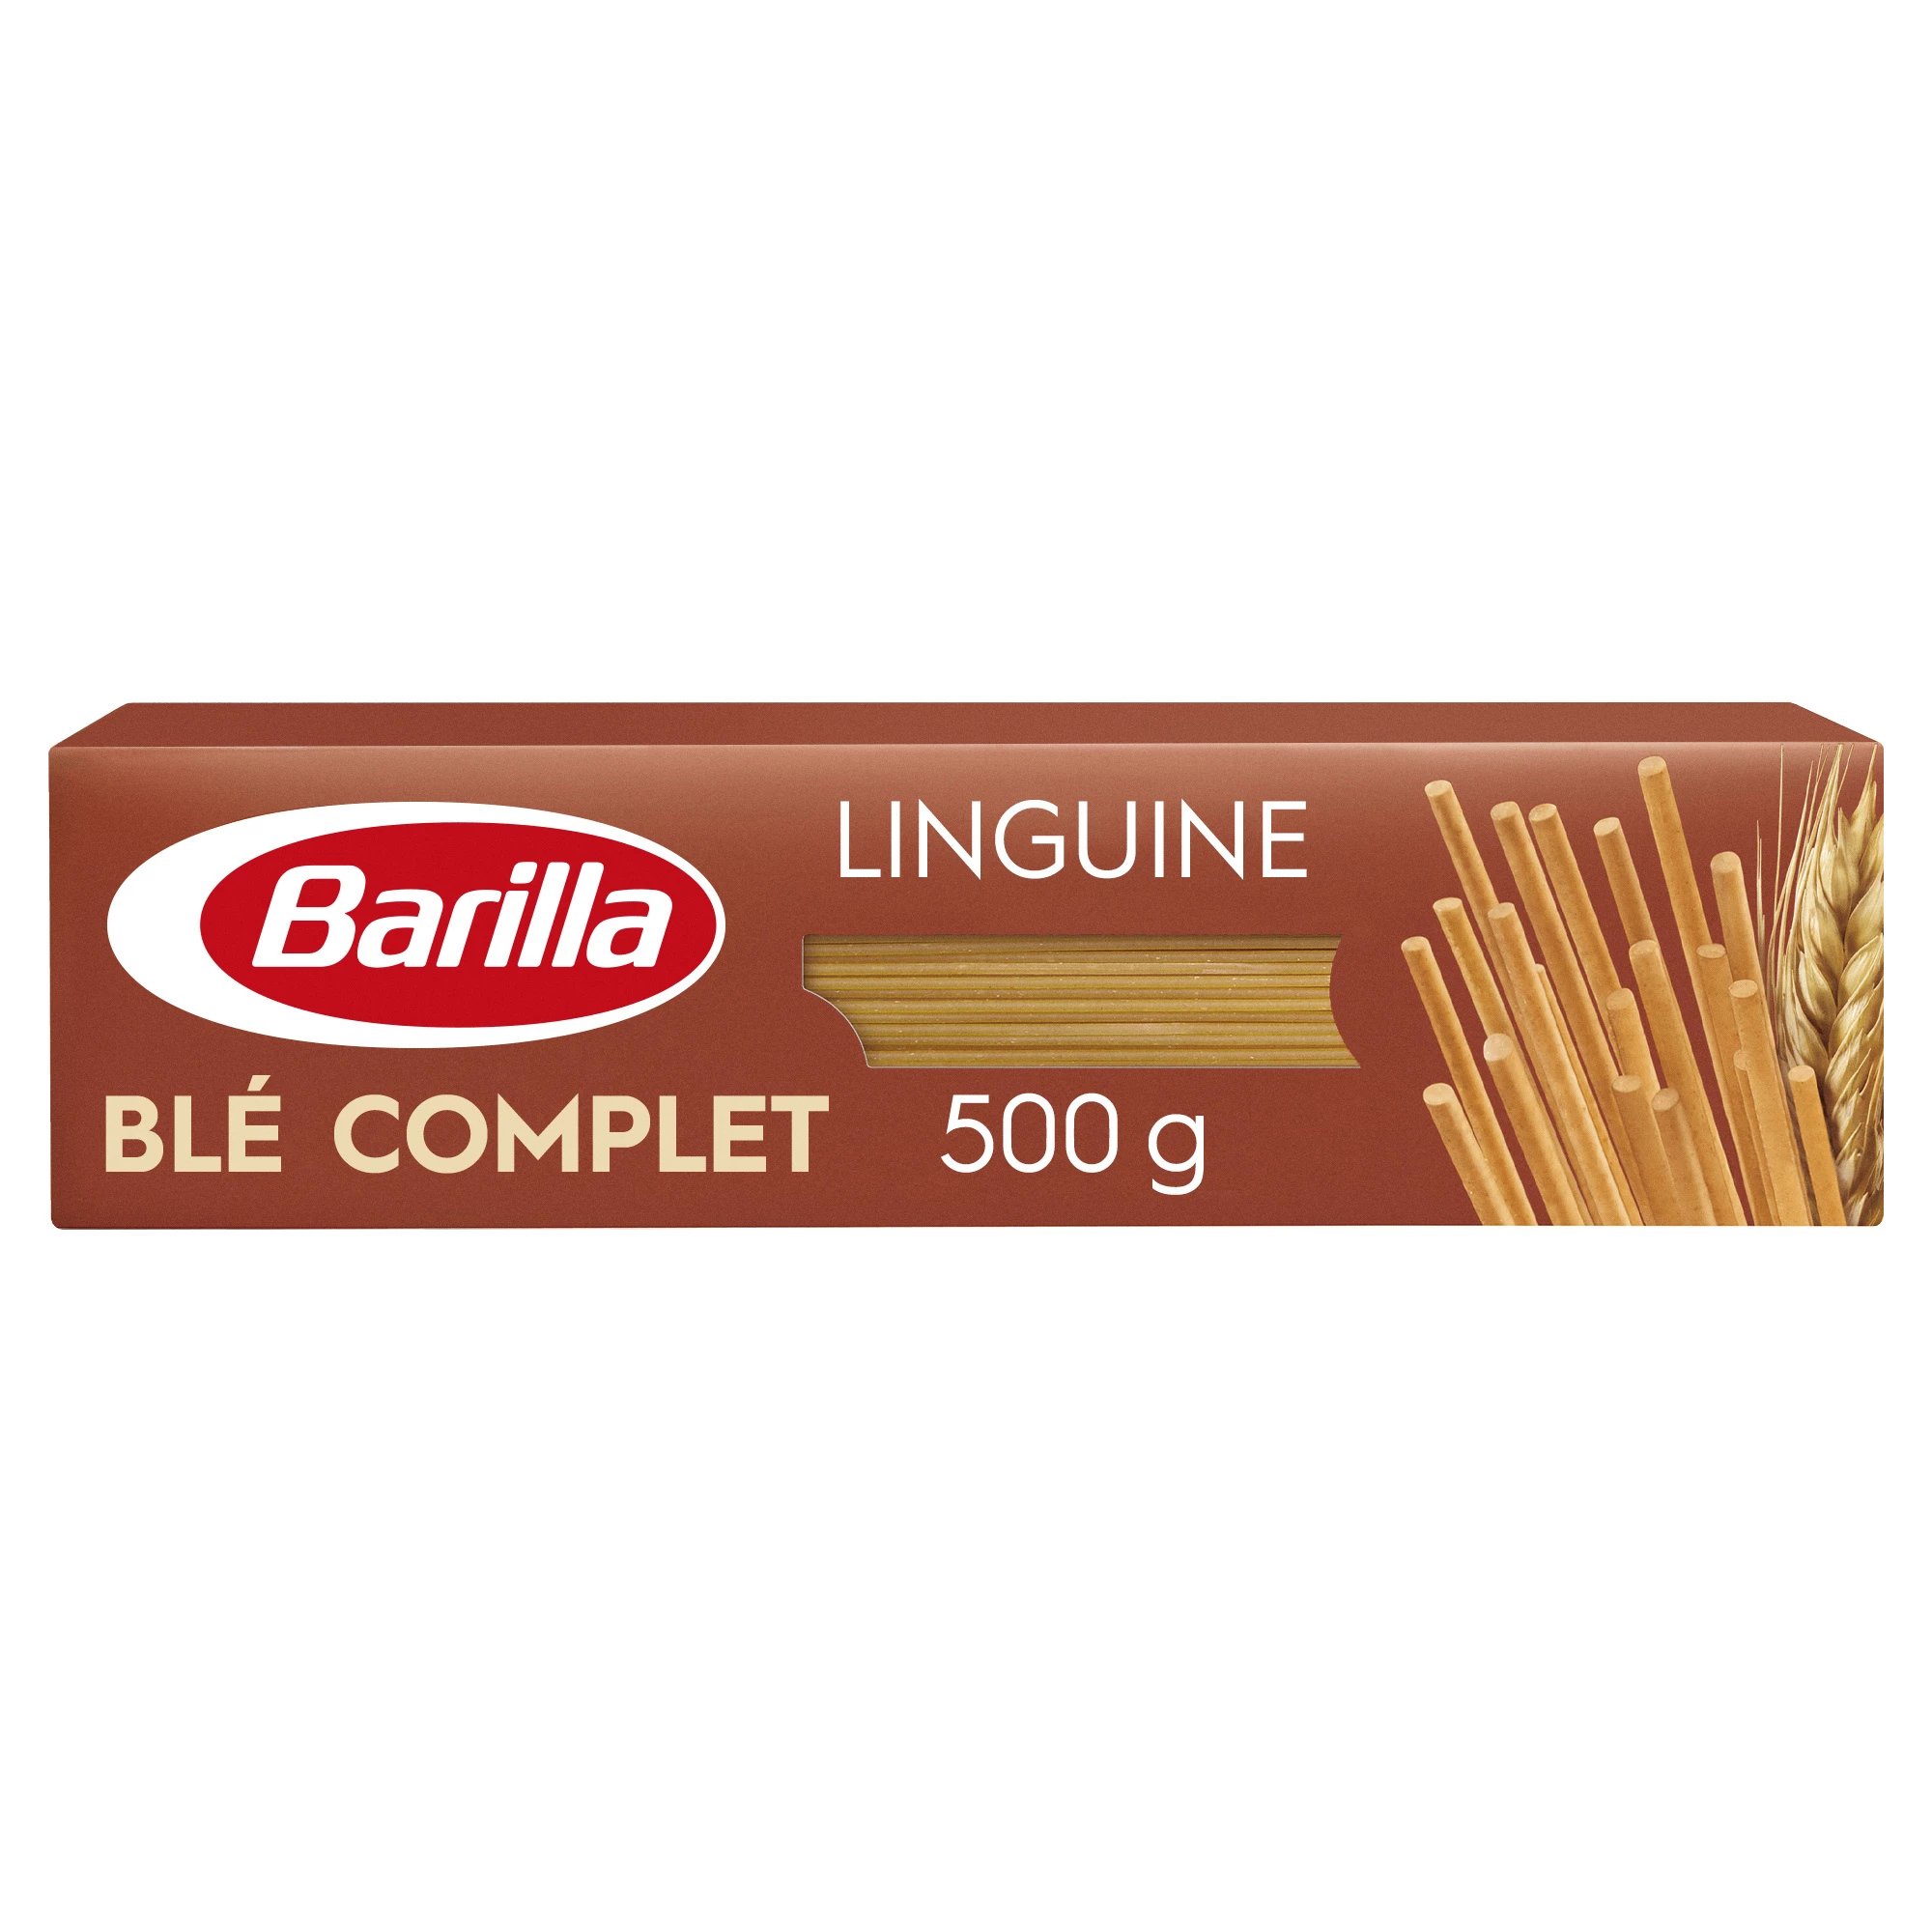 Linguine Ble Completa 500g